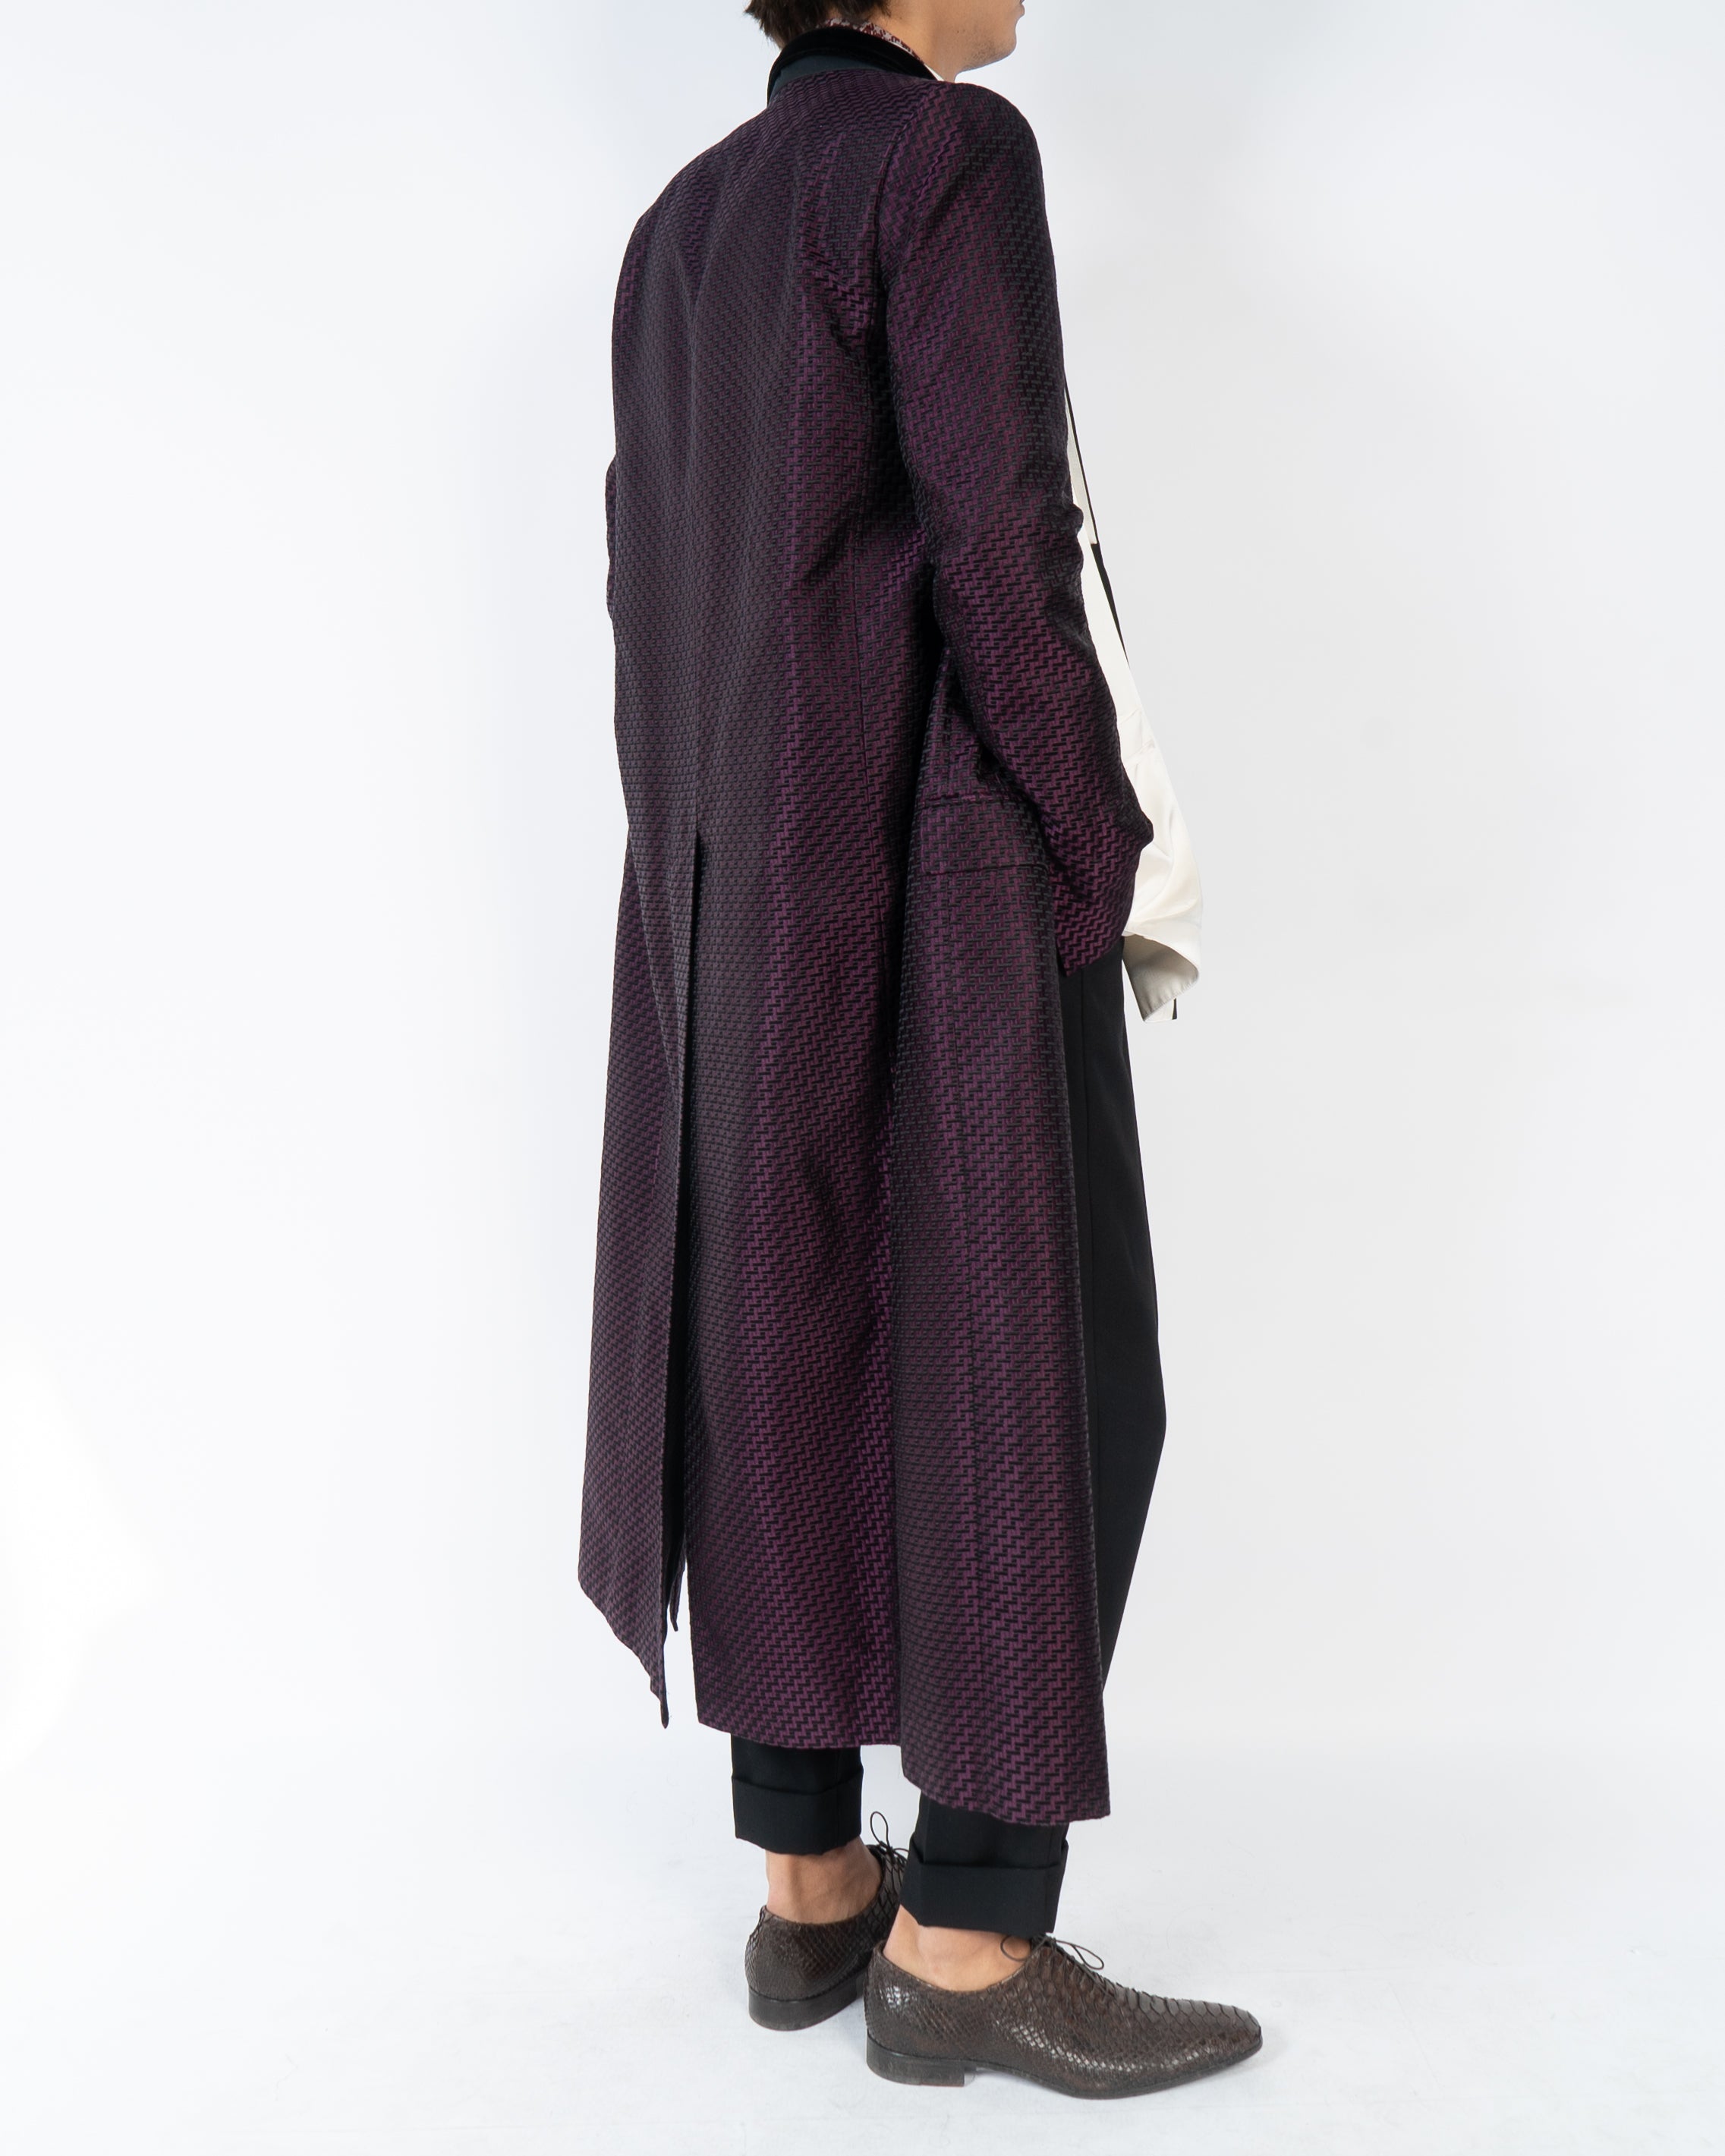 FW20 Purple Silk Jacquard Coat 1 of 1 Sample